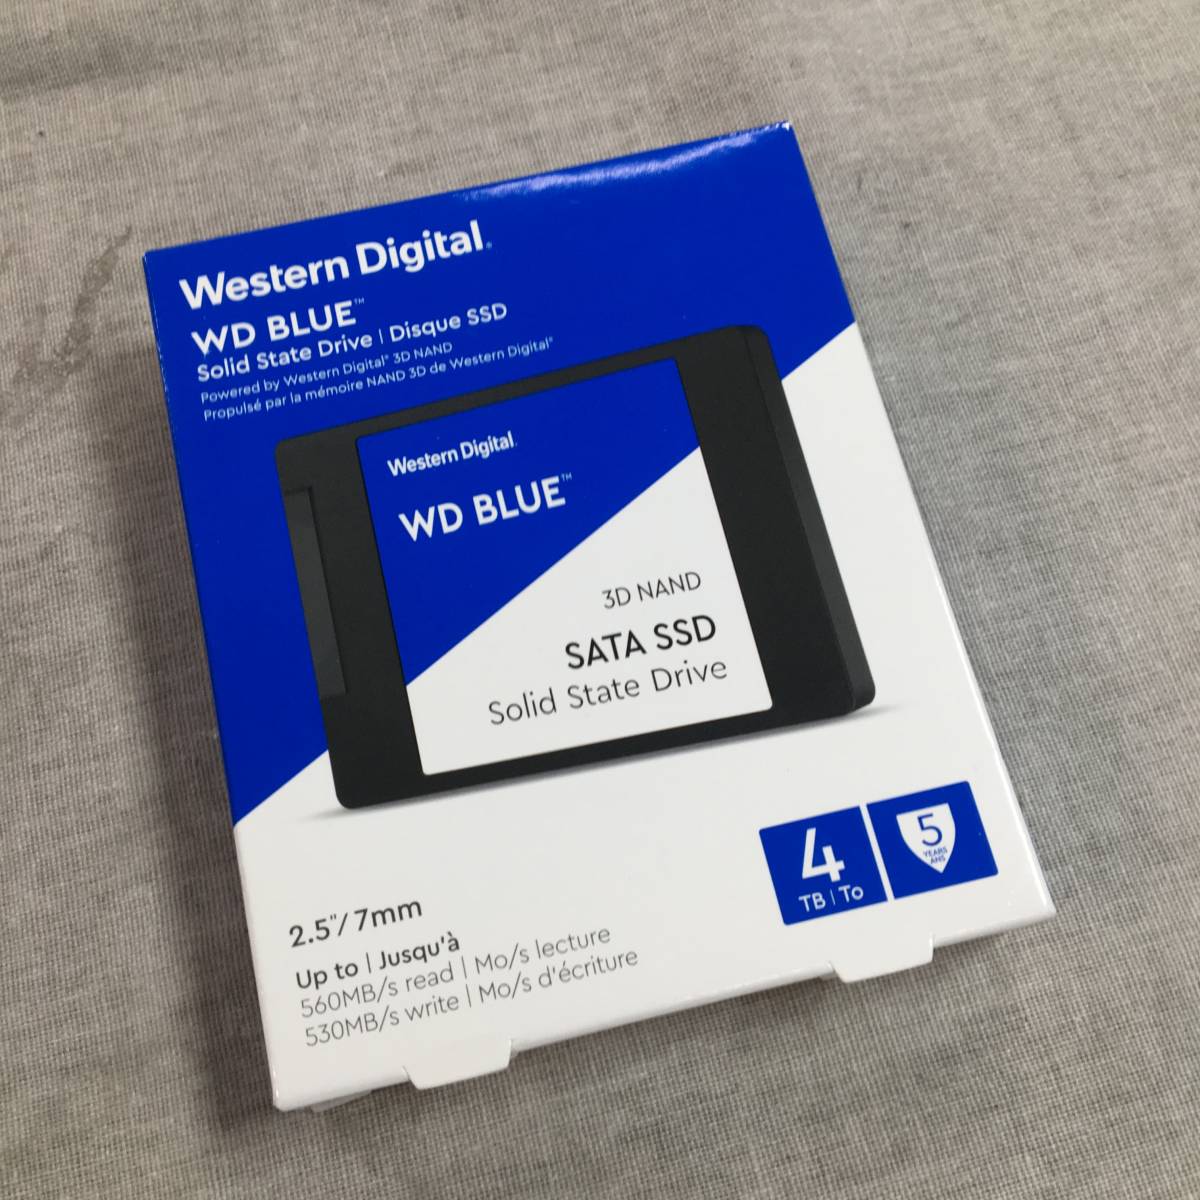 WD Blue SSD 4TB ウエスタンデジタル 新品未開封 smcint.com